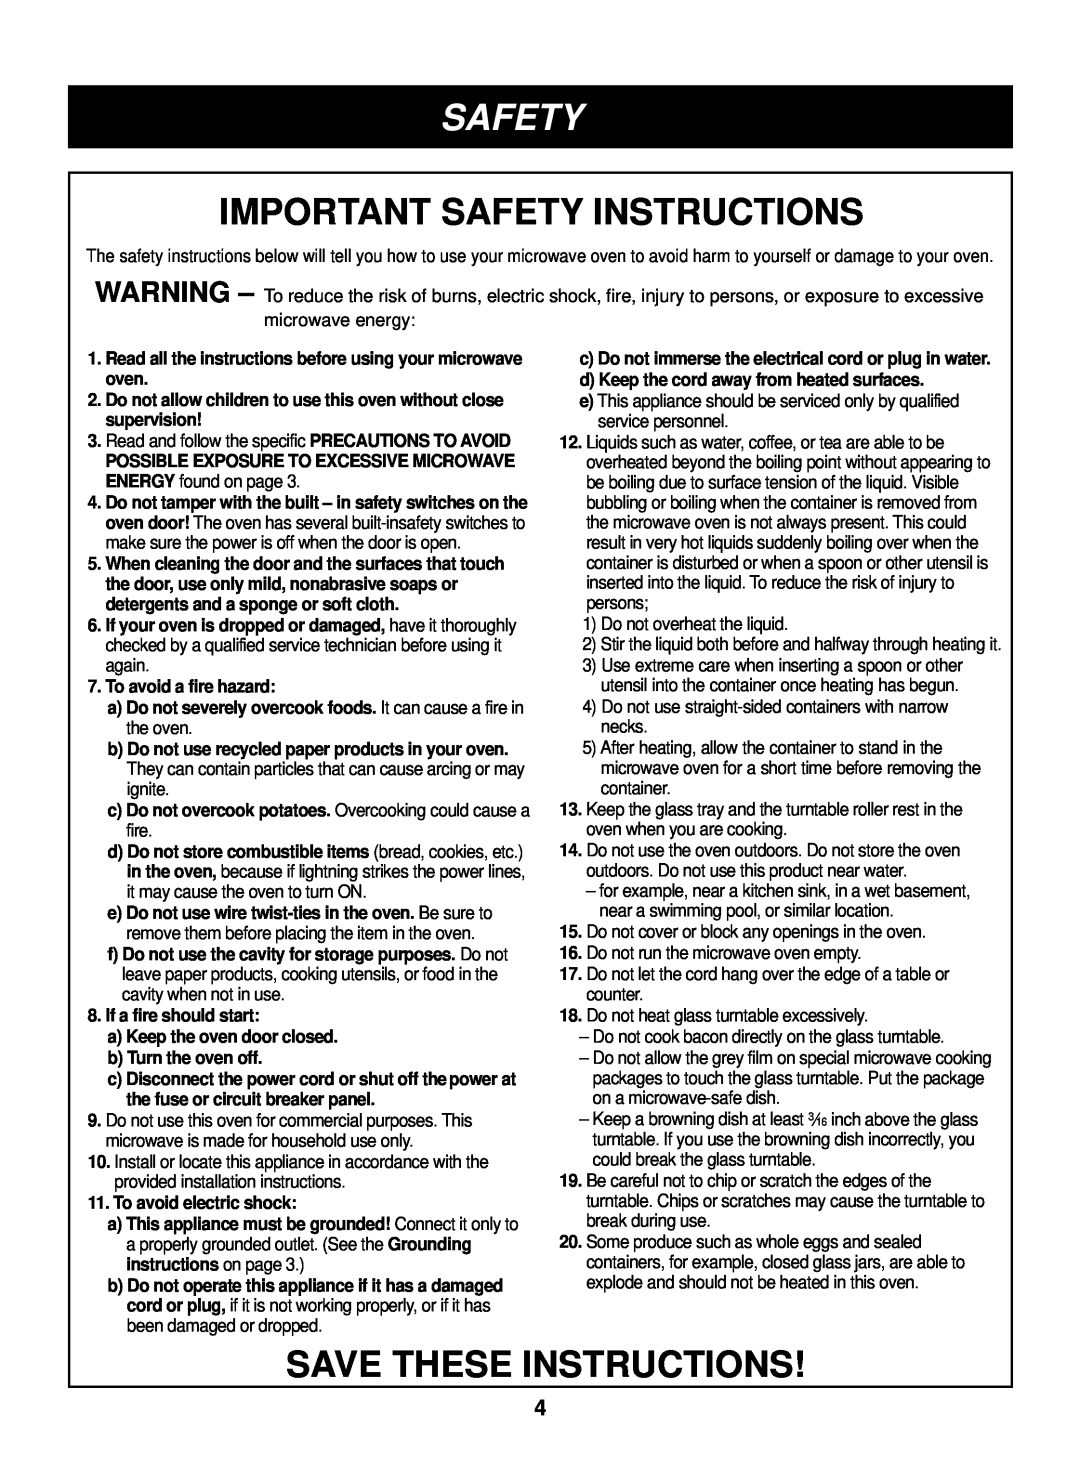 LG Electronics LTRM1240ST, LTRM1240SB, LTRM1240SW manual Important Safety Instructions, Save These Instructions 